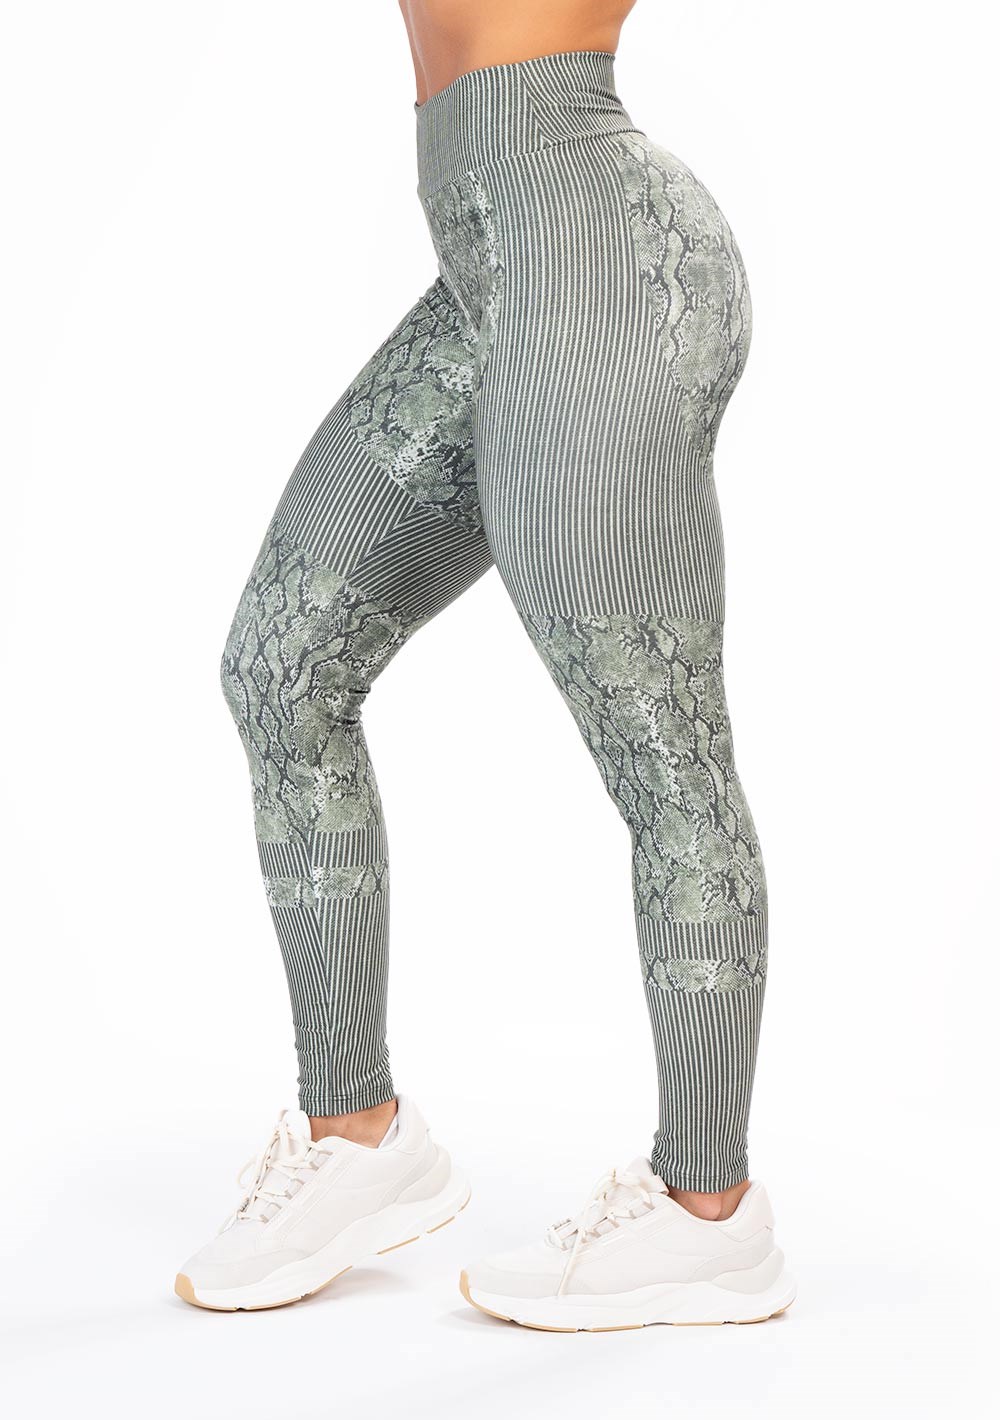 Legging fitness feminina new printed estampada snake verde